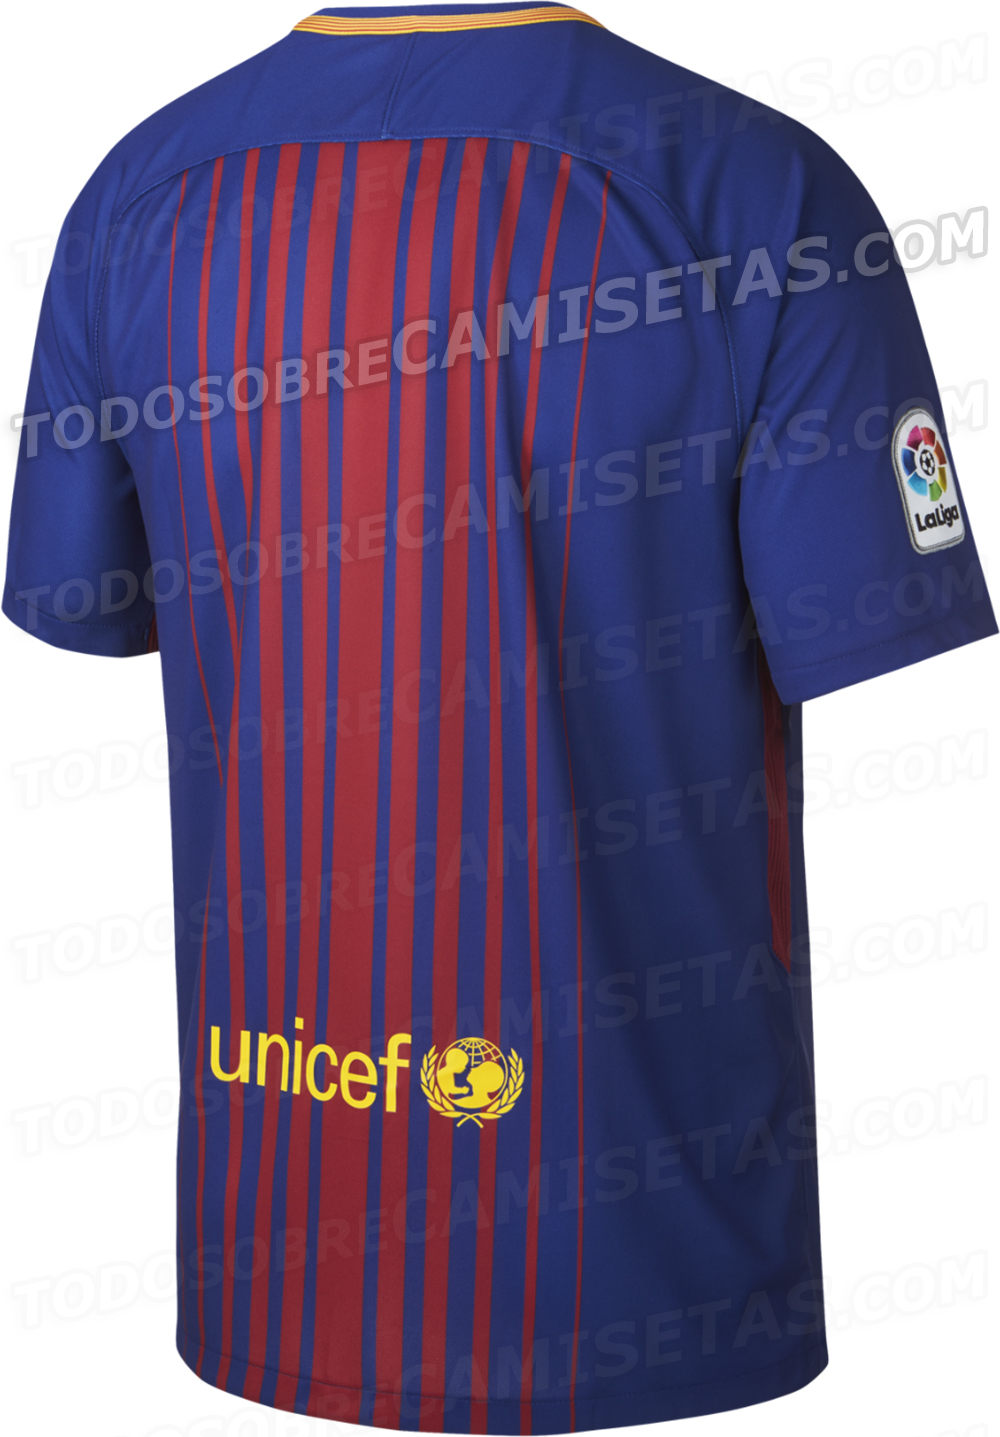 Camiseta Nike de FC Barcelona 2017-18